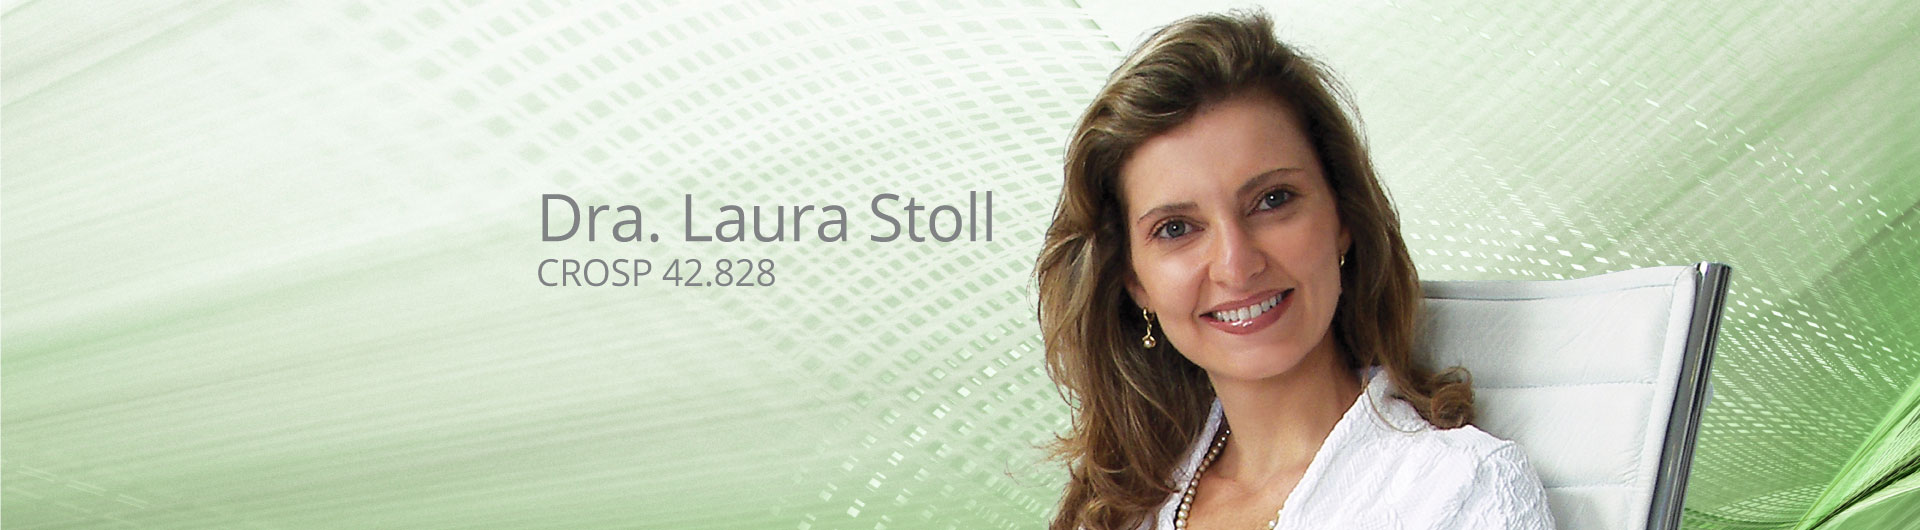 Dra. Laura Stoll - CROSP 42.828